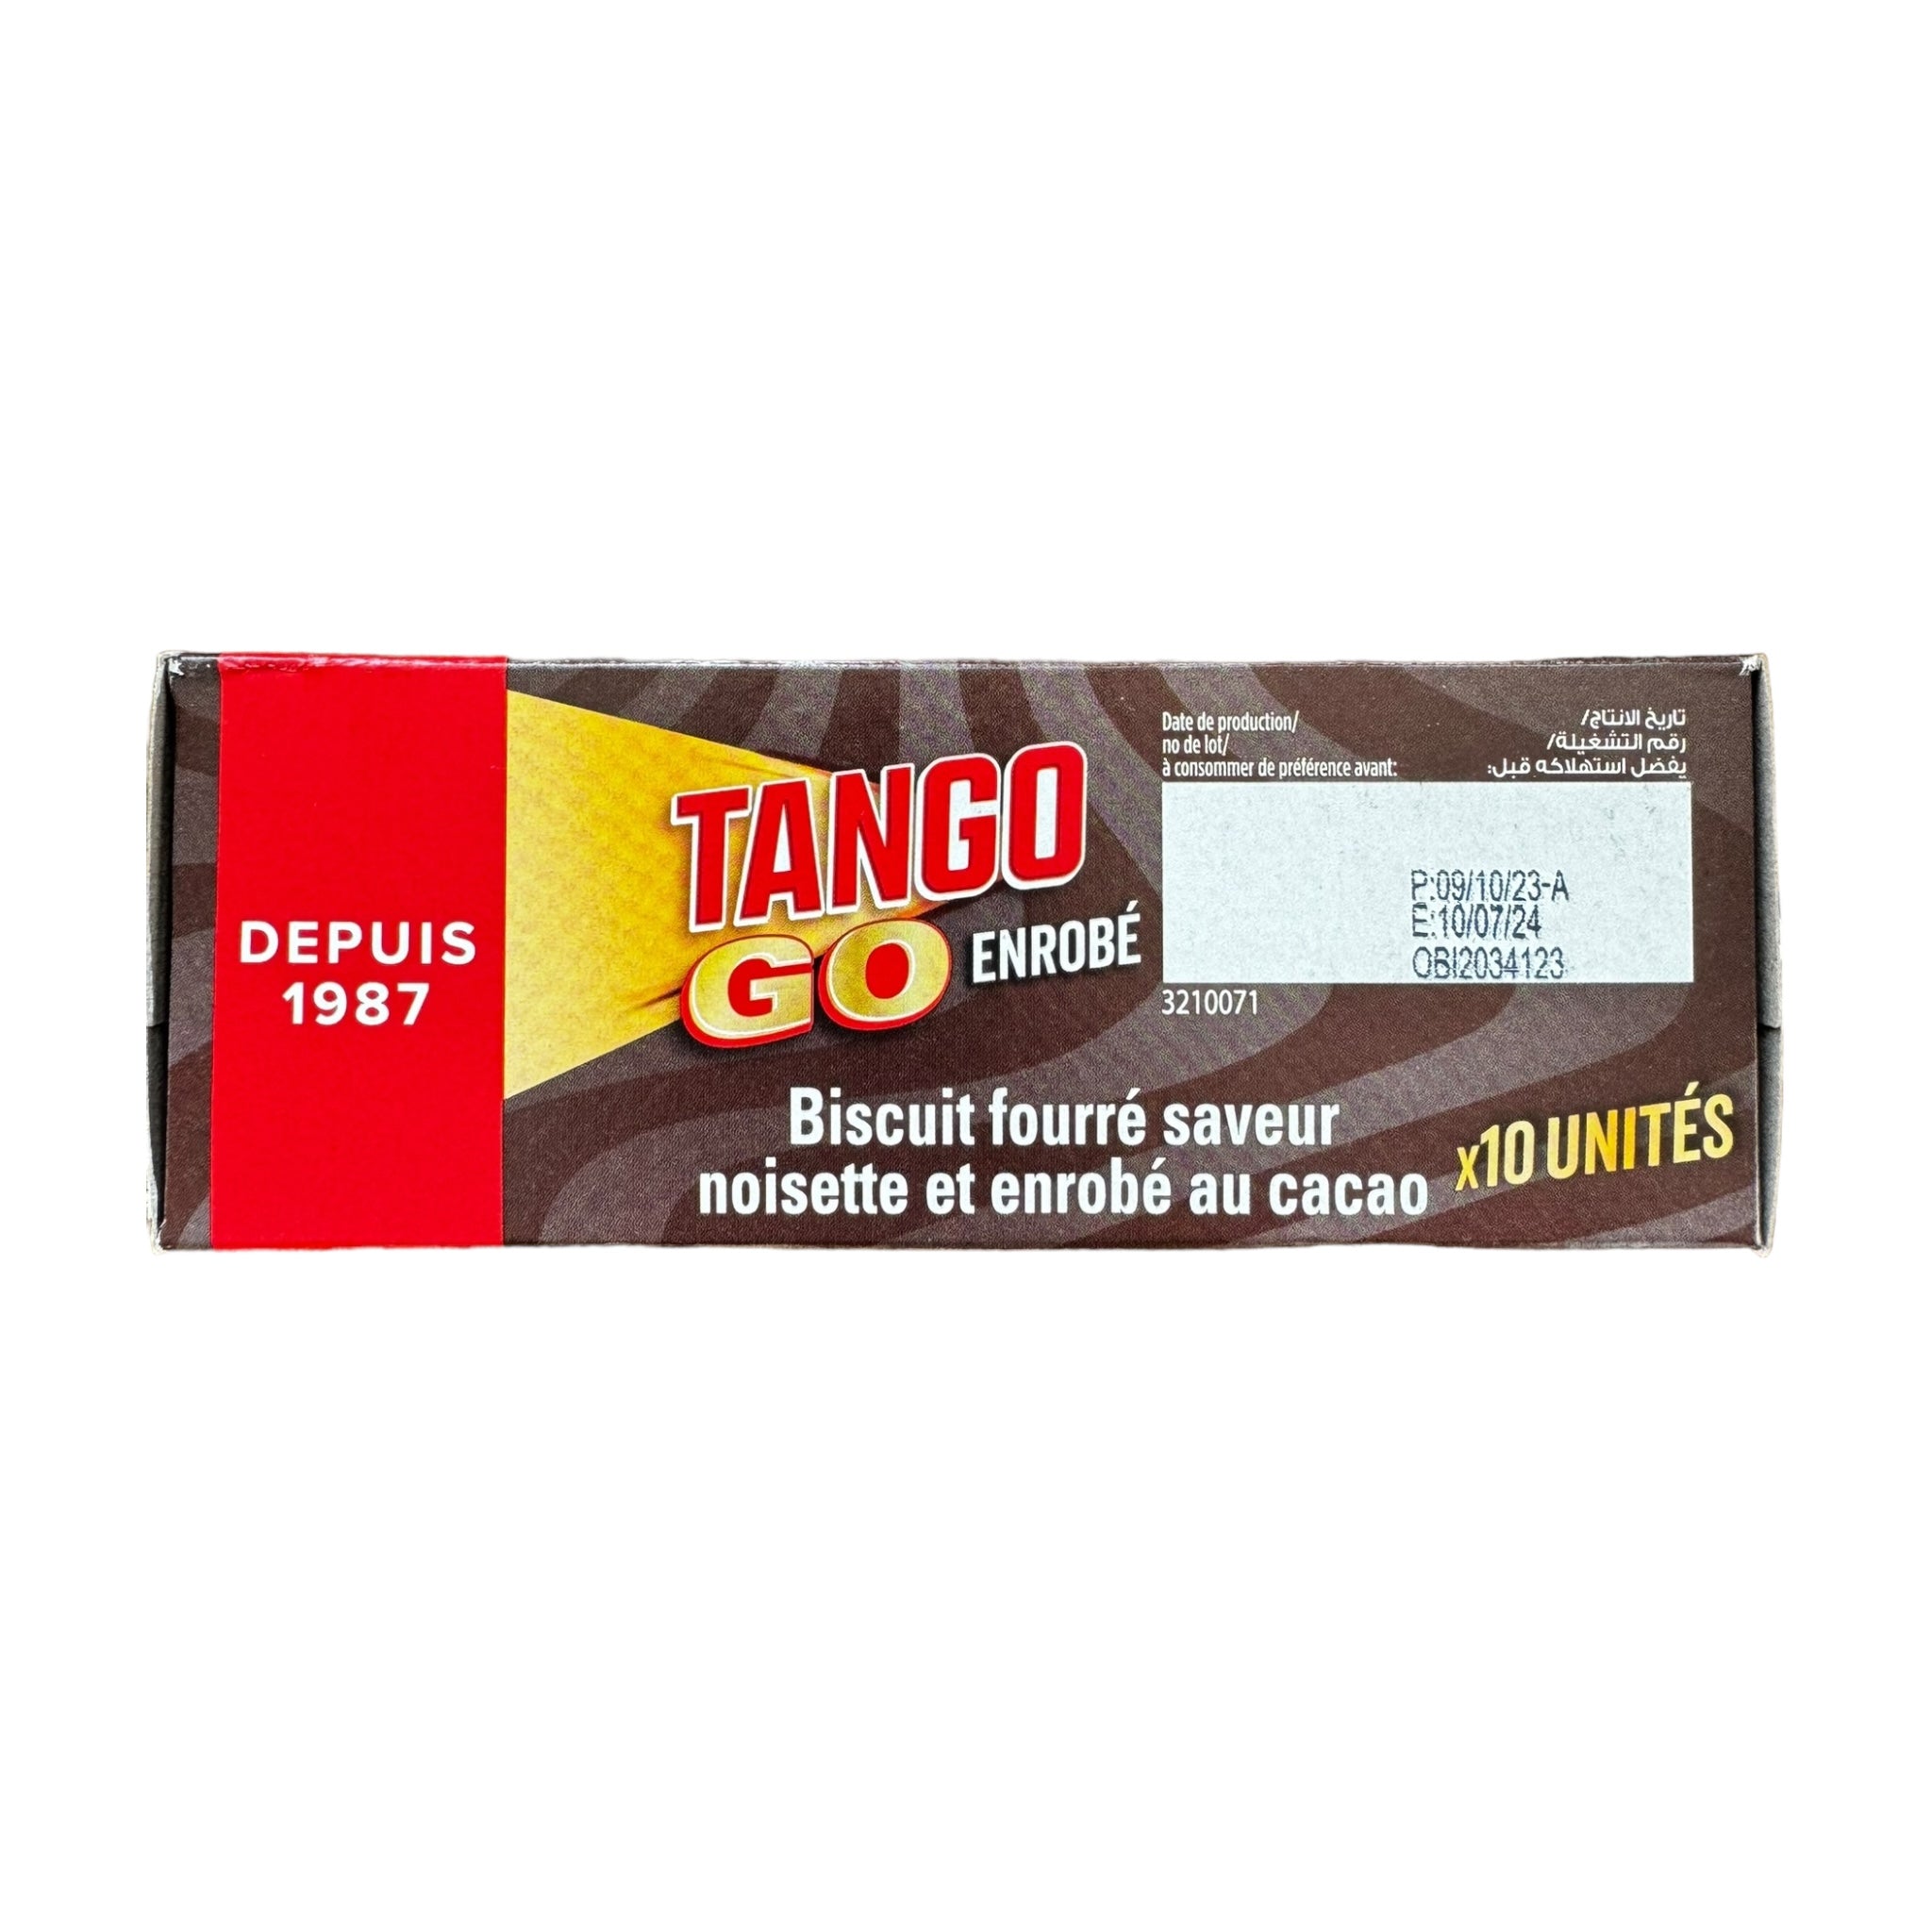 Tango GO Cookies By Bimo